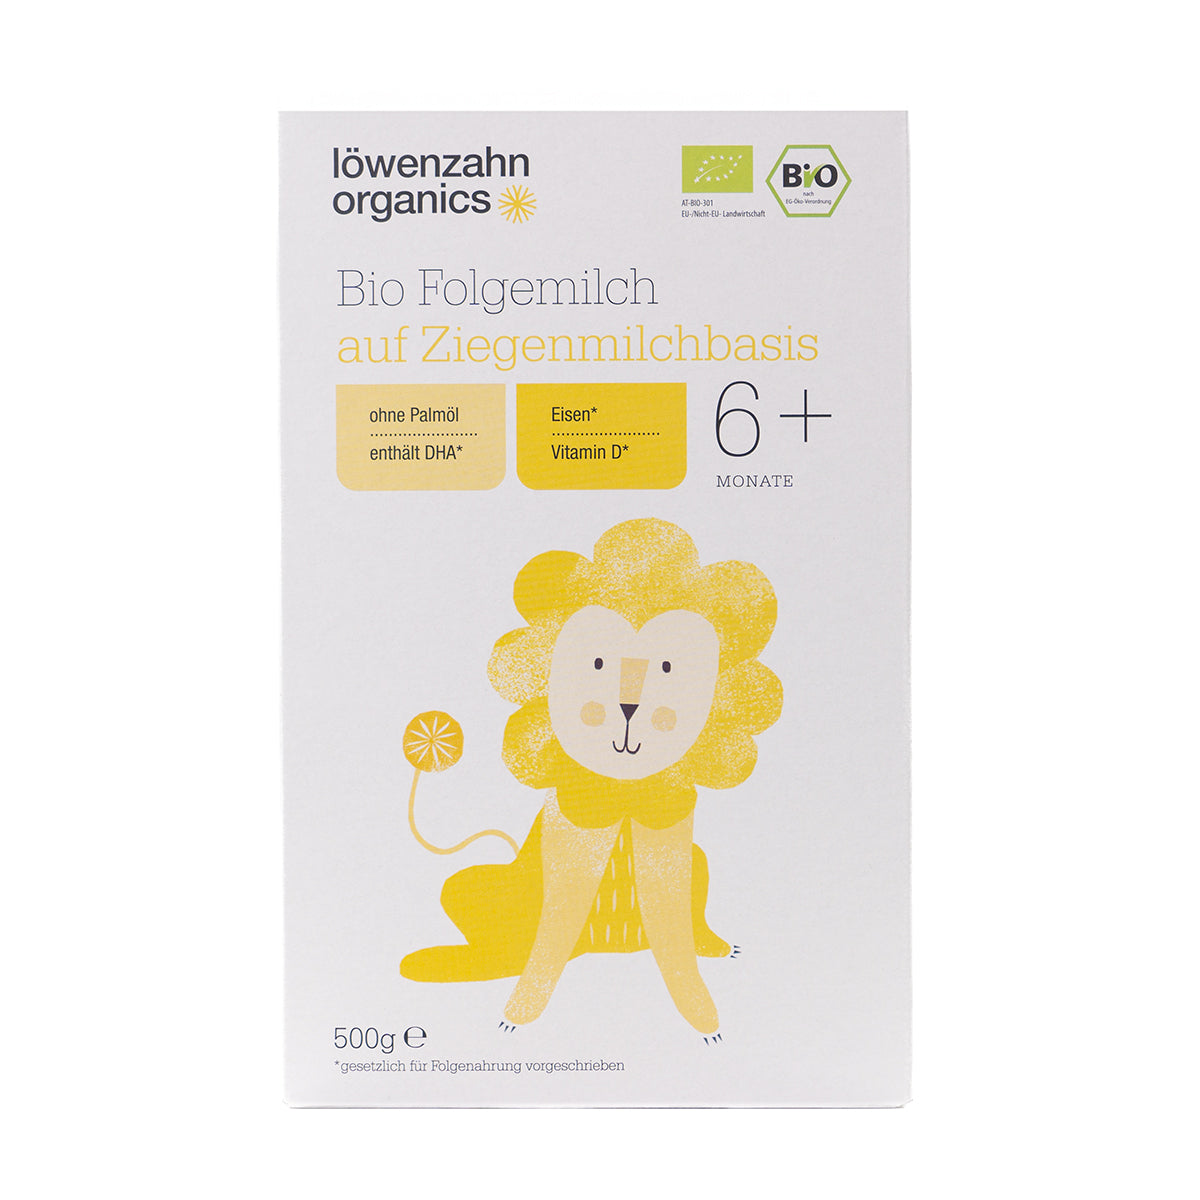 Löwenzahn Organics Goat Stage 2  | European Follow-On Baby Formula